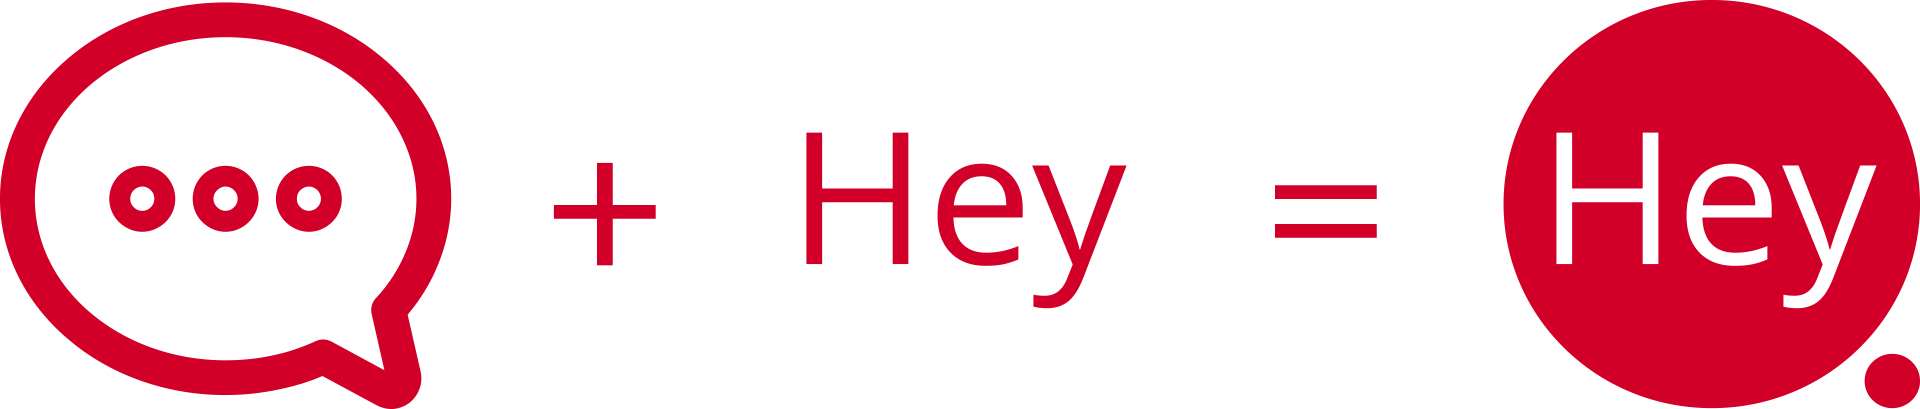 HeyMenu logo design process